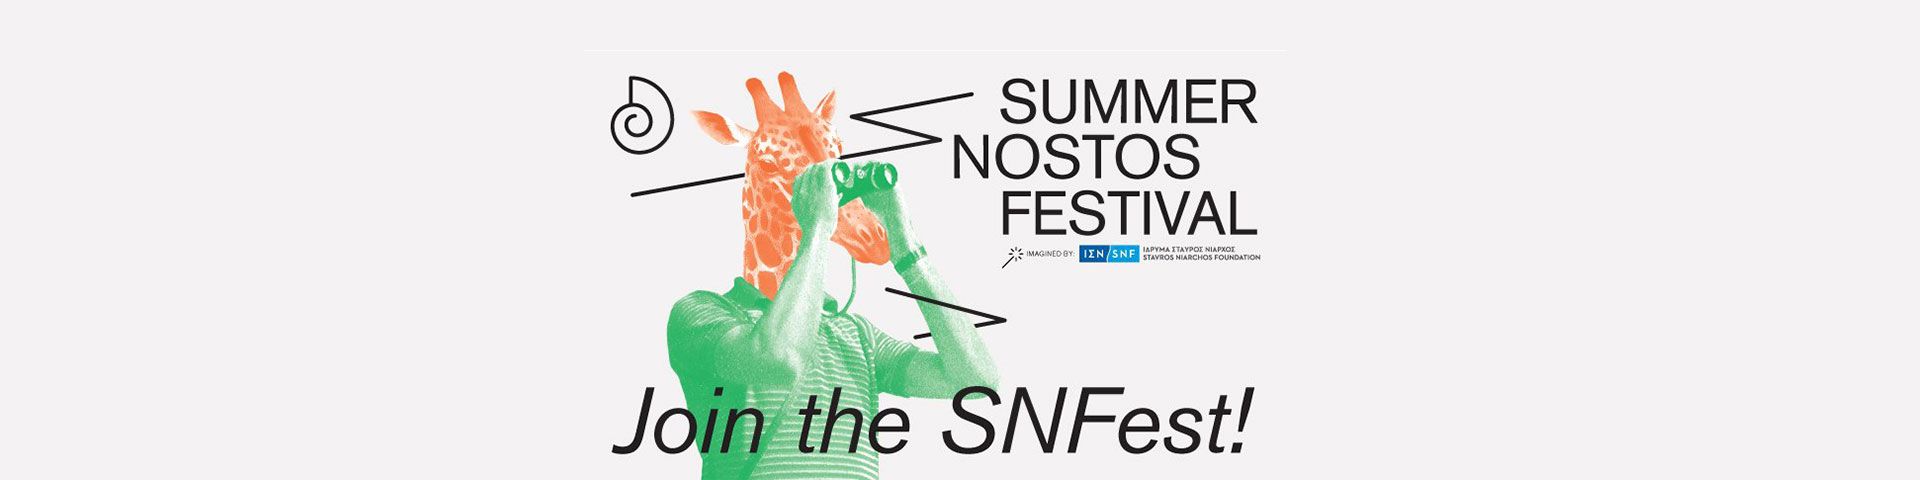 Open Call για Εθελοντές του Summer Nostos Festival - Εικόνα